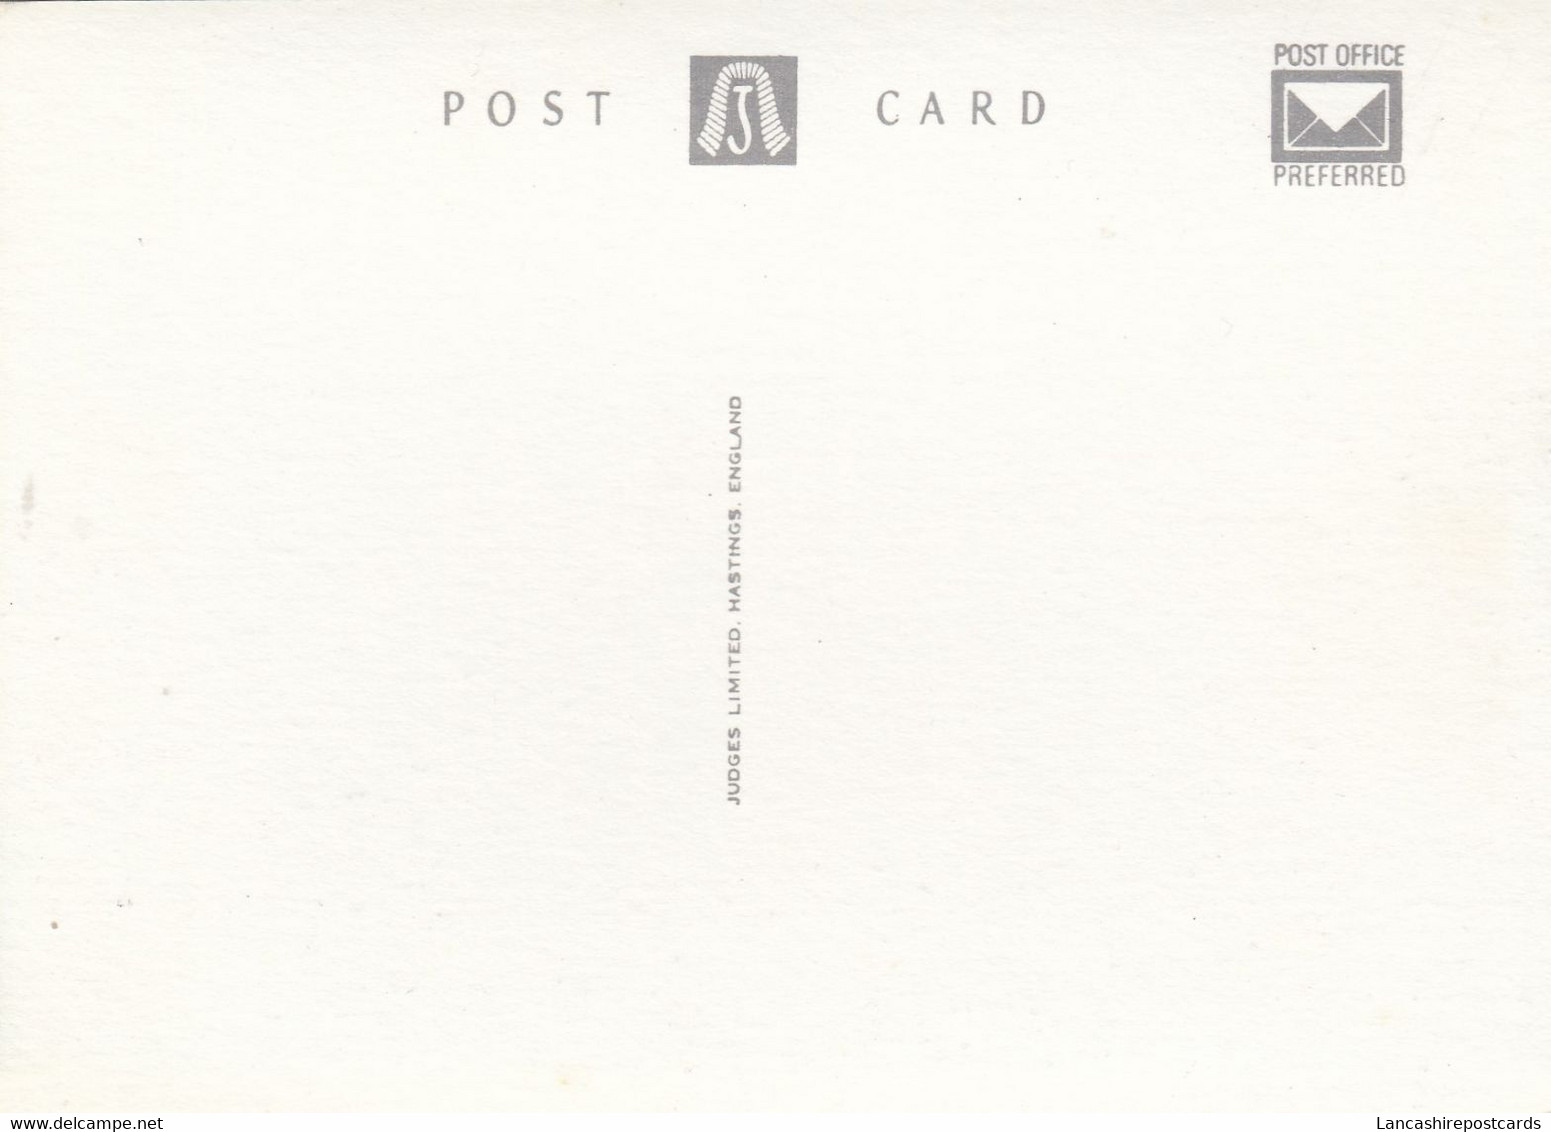 Postcard New Quay Cardiganshire  My Ref B24692 - Cardiganshire